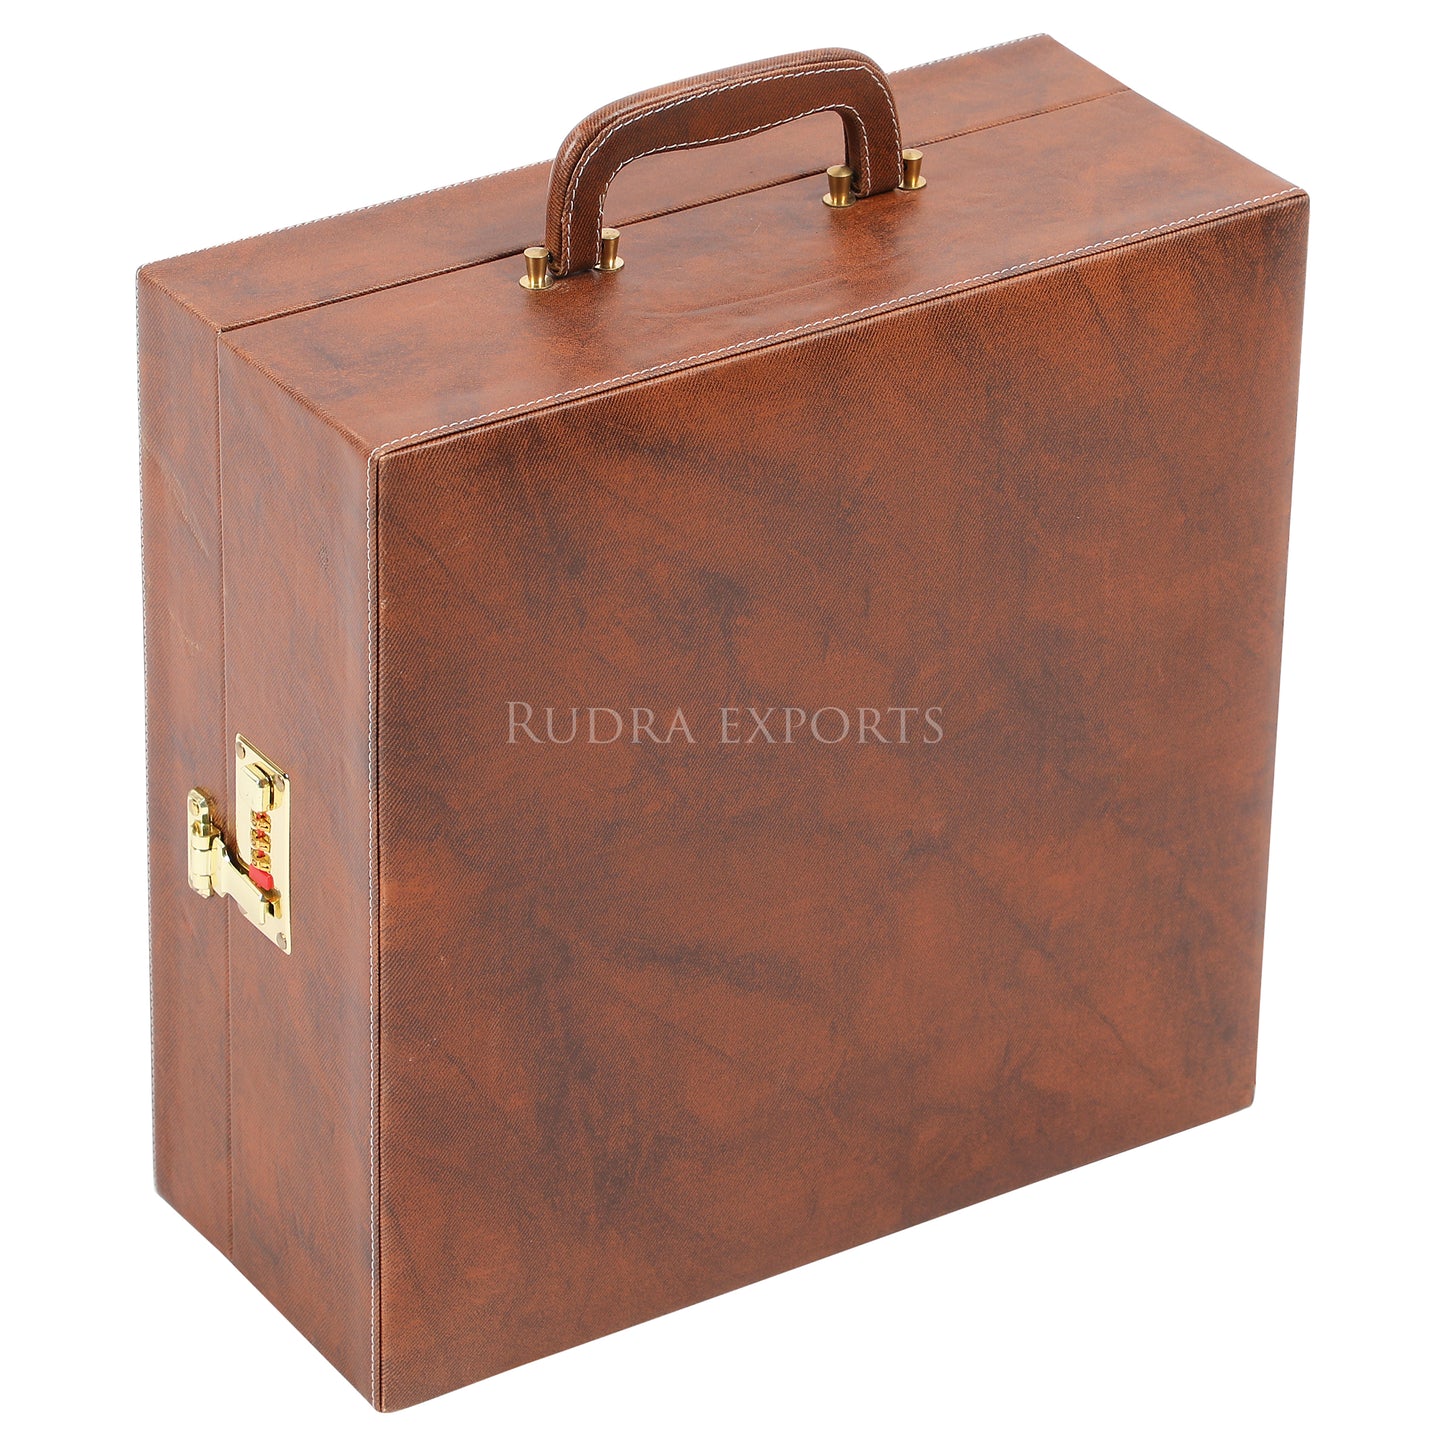 Rudra Exports Portable Leatherette Bar Set | Whisky Case | Wooden Bar Set for Picnic | Travel Bar Set (Holds 01 Bottle & 4 Whisky Glasses) Brown